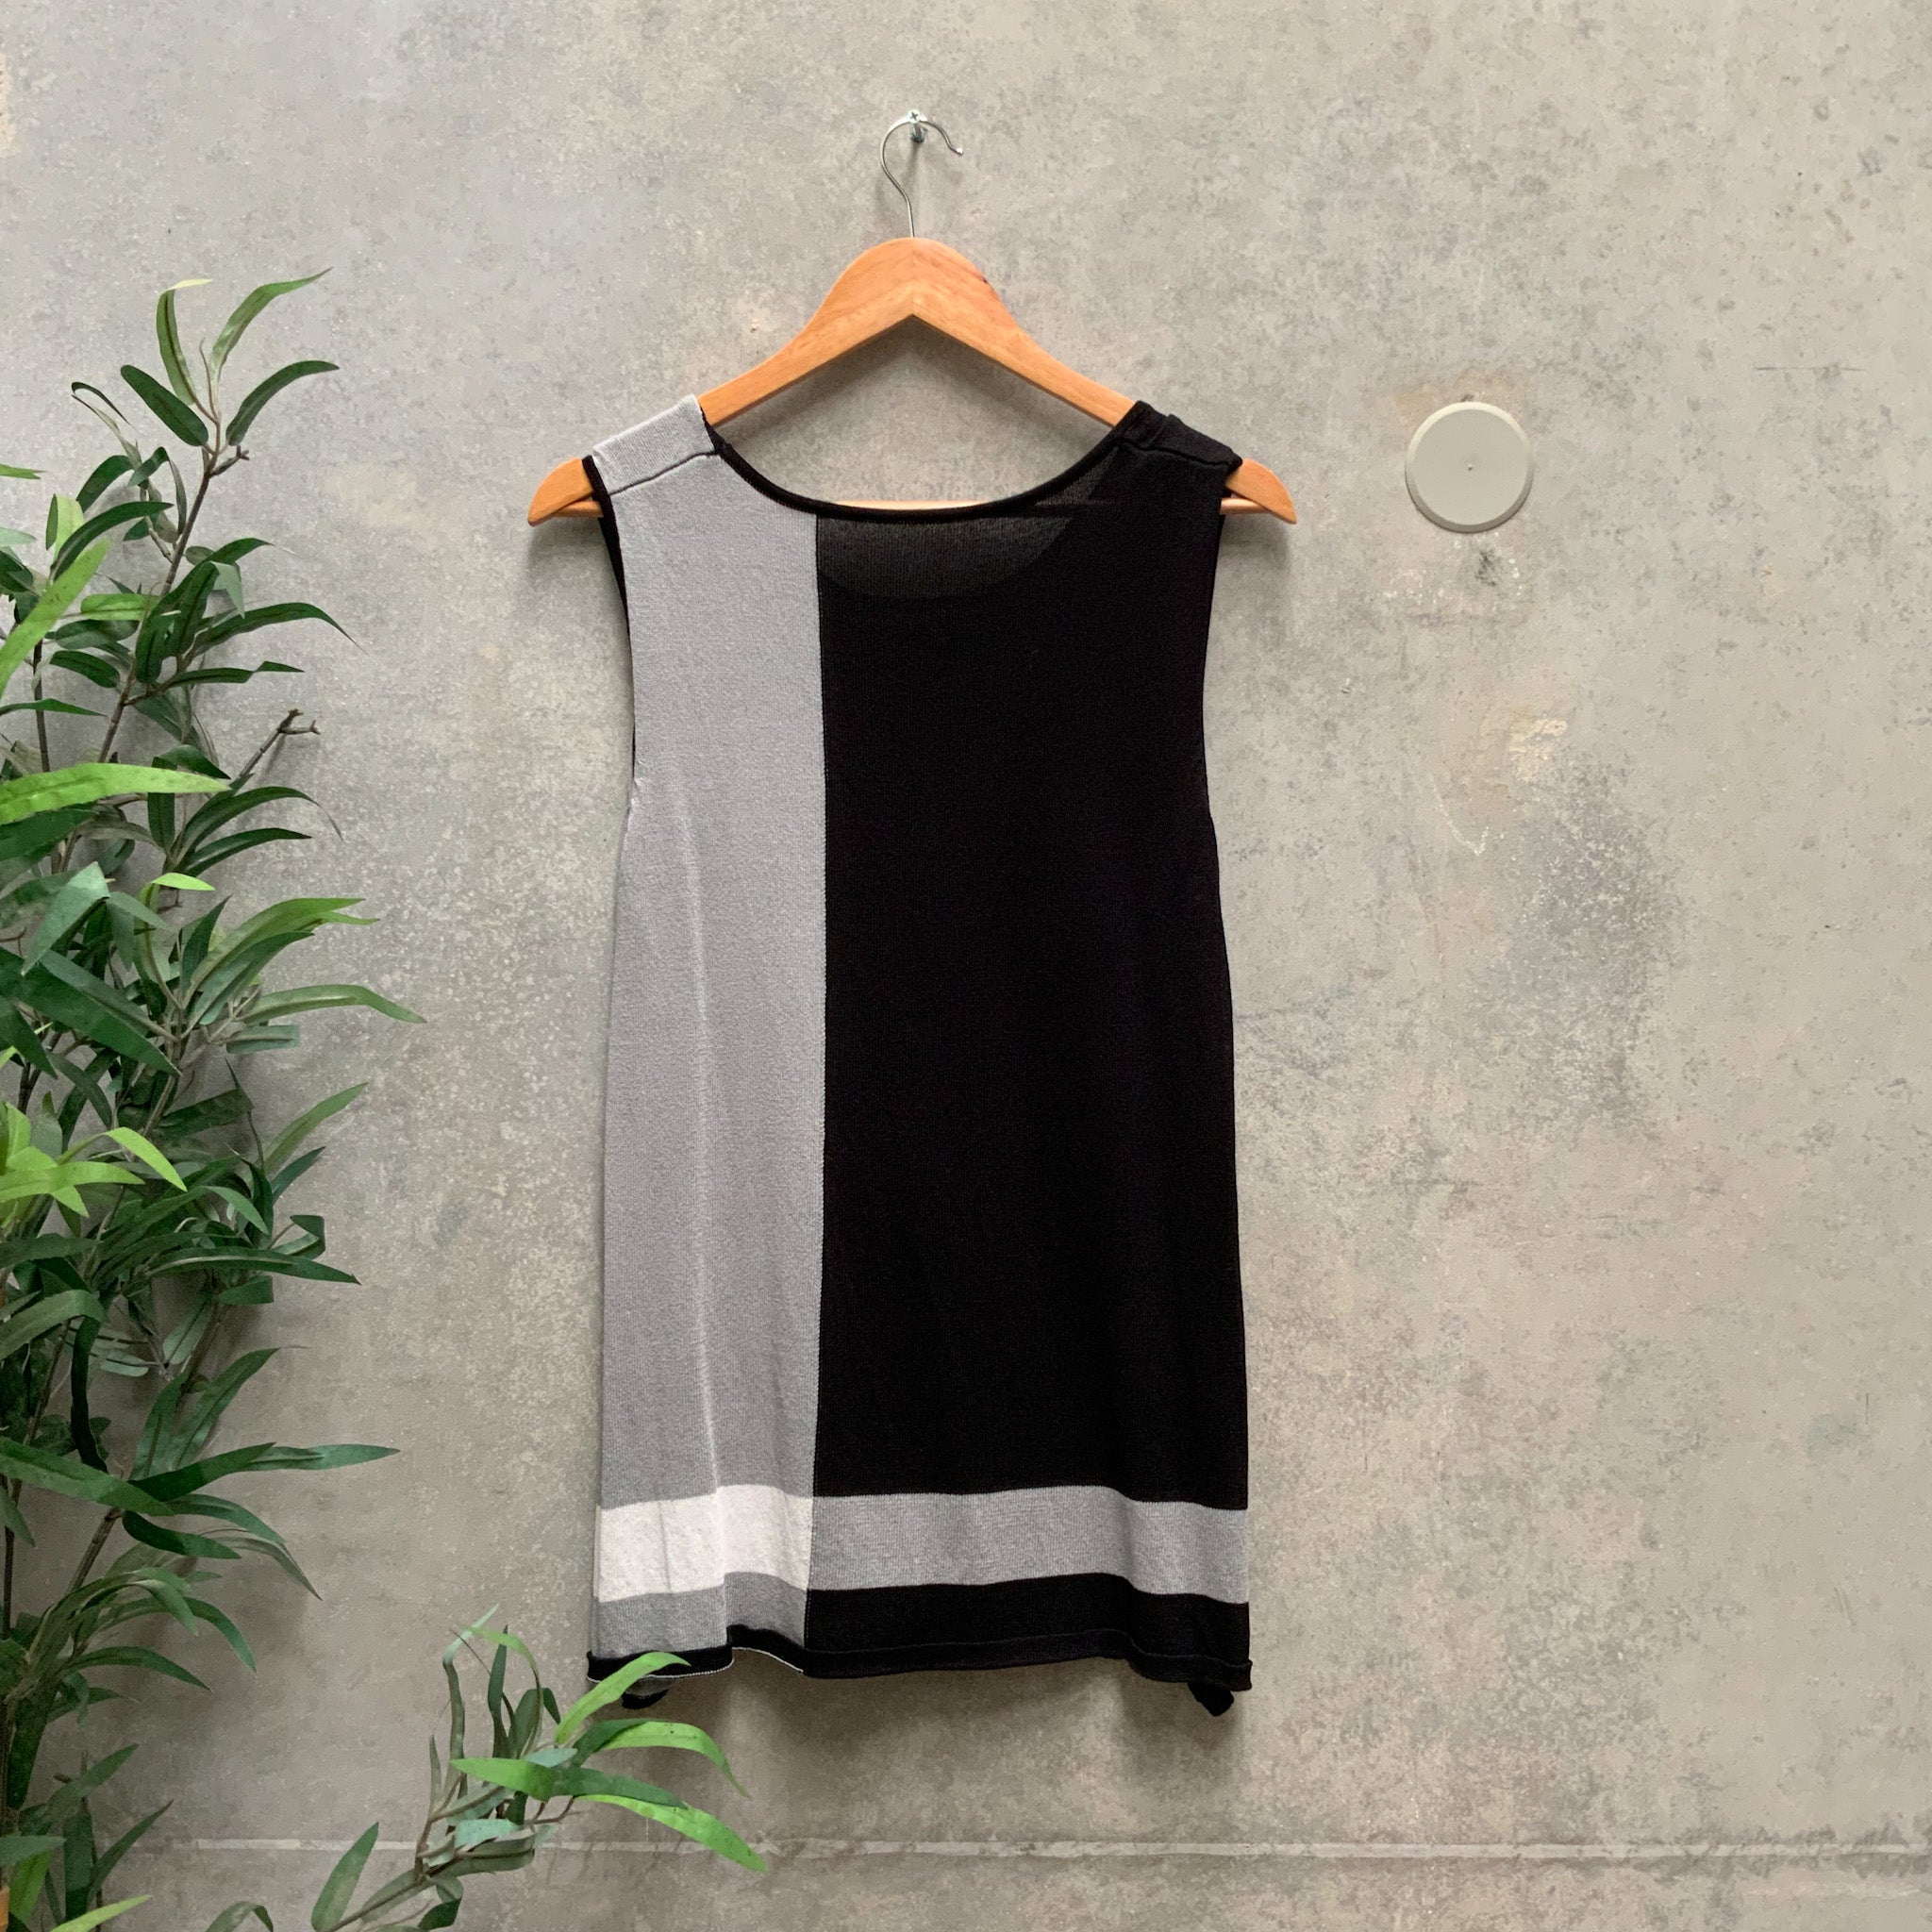 NONI B Ladies Black and Gray 2 Piece Longline Cardigan Set - Size XL